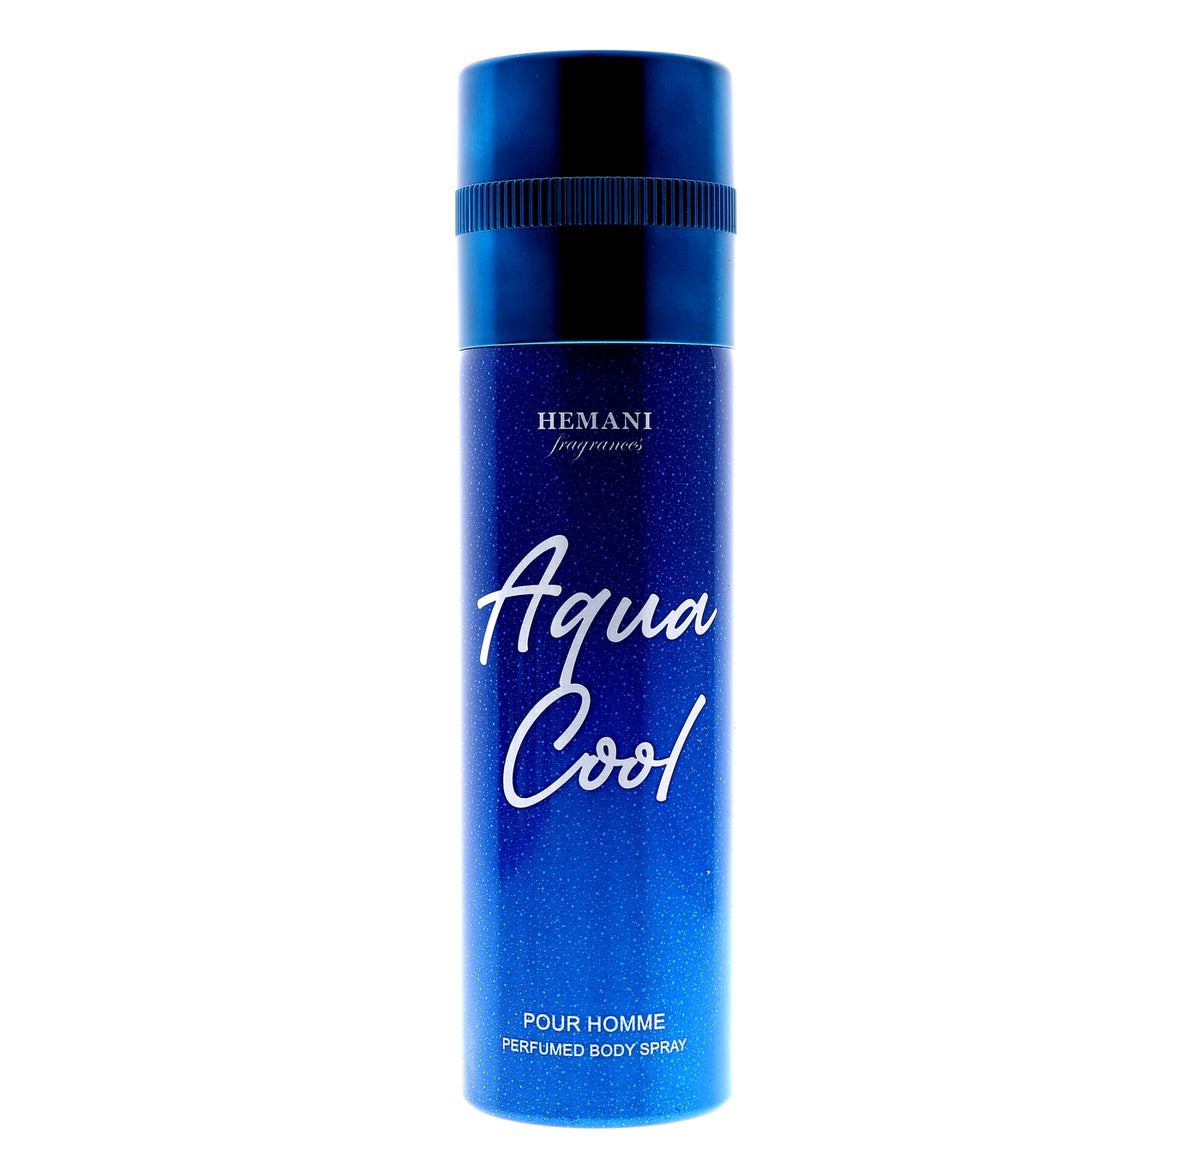 HEMANI Aqua Cool Deodorant Spray 200mL